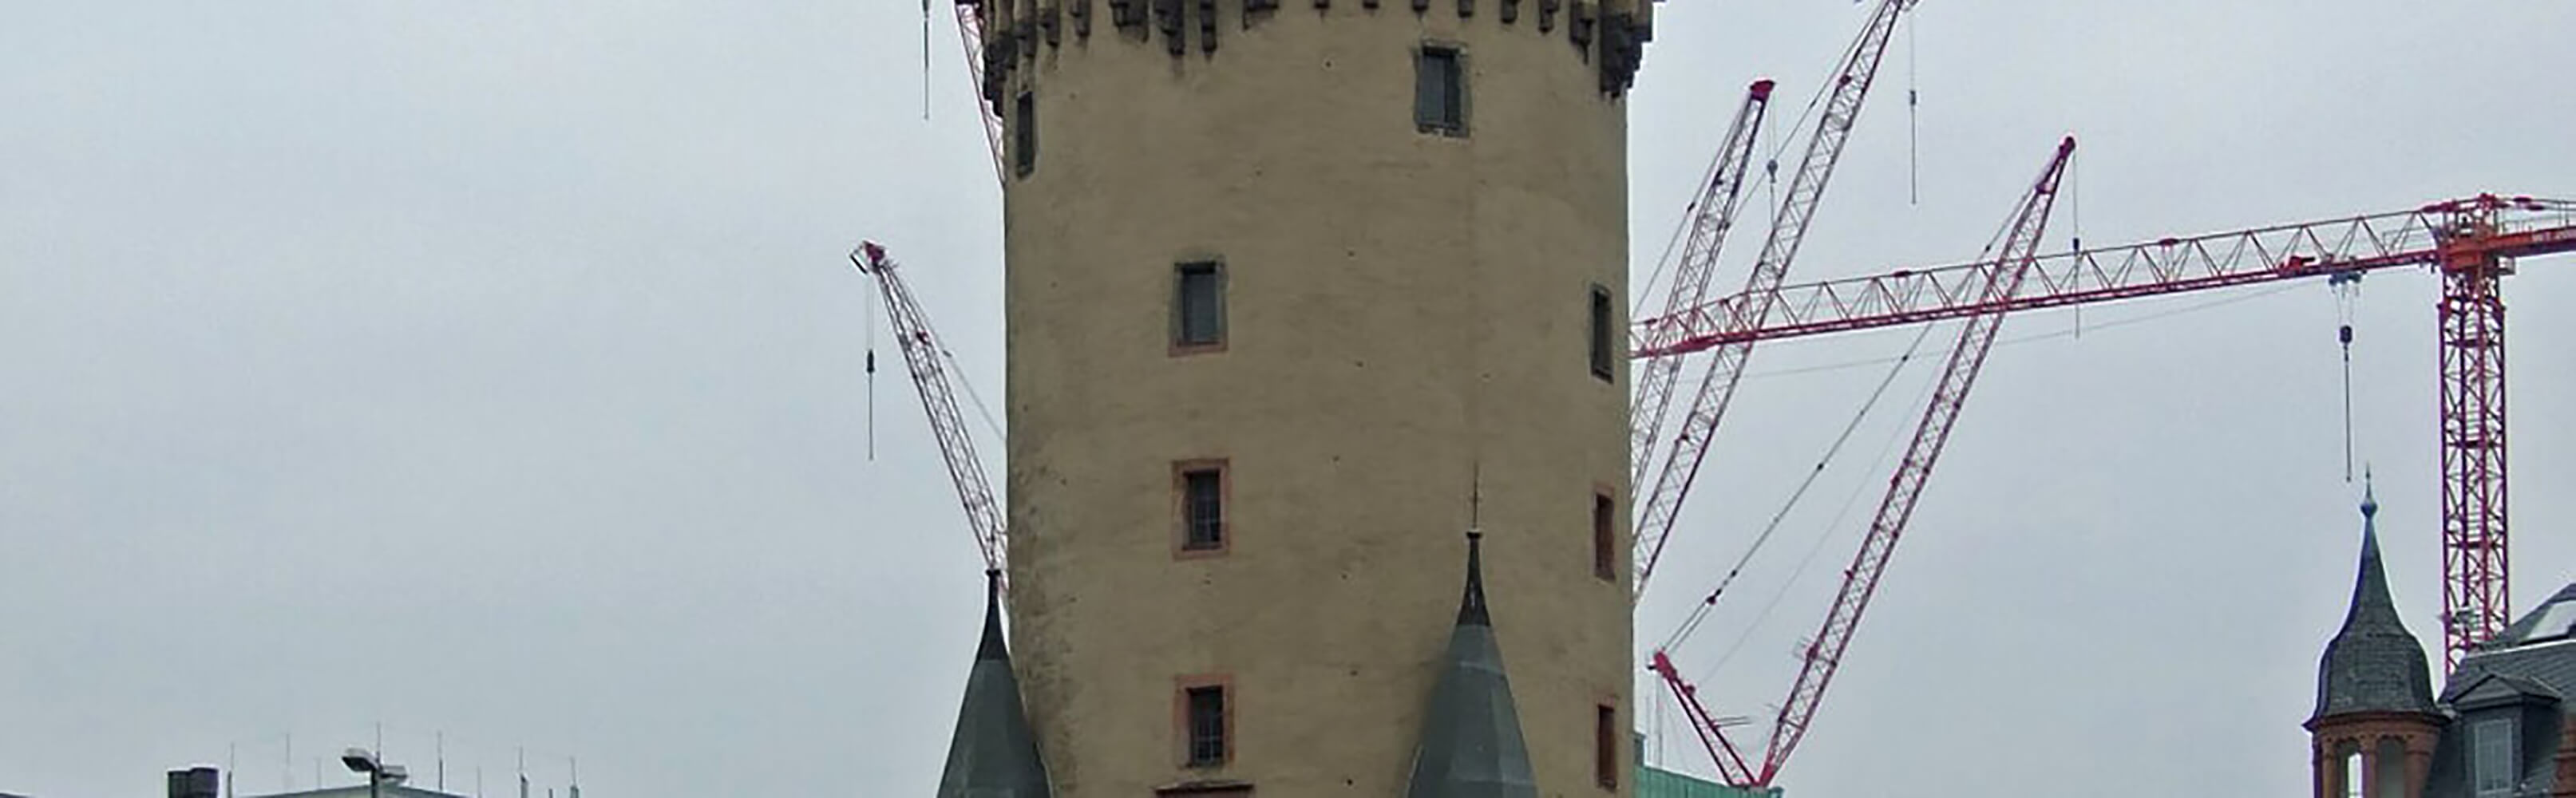 Eschenheimer Turm 1